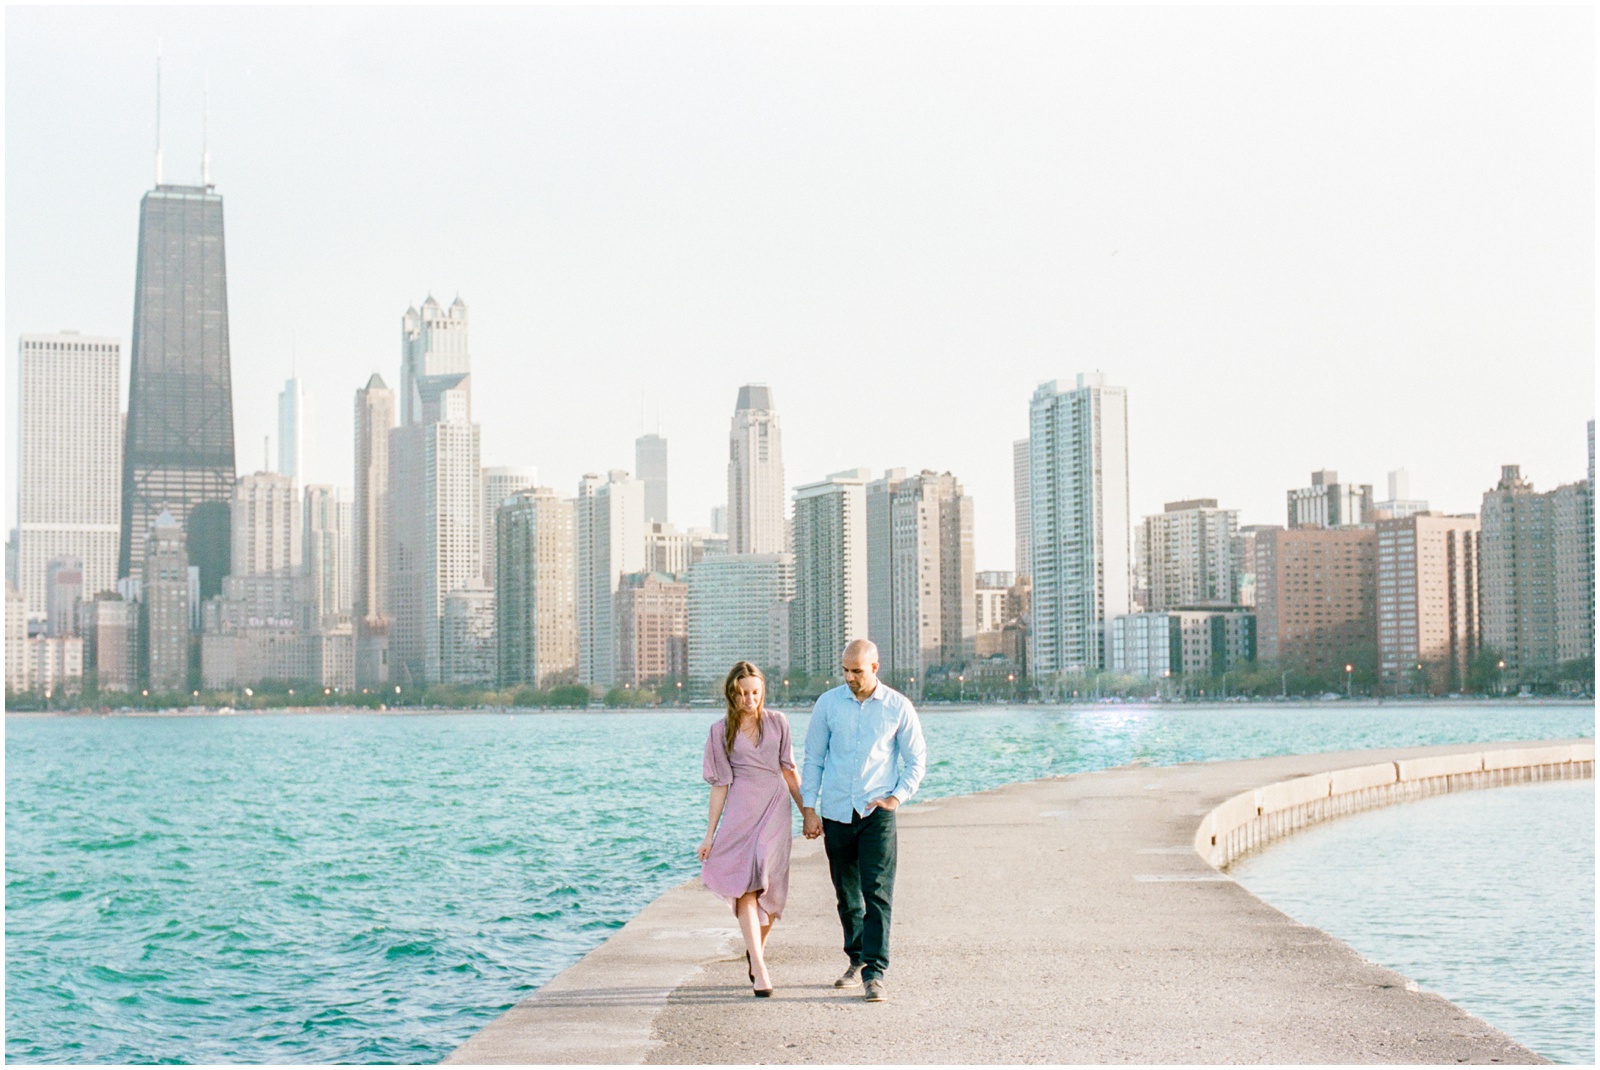 walking on pathway on Lake Michigan with Chicago skyline